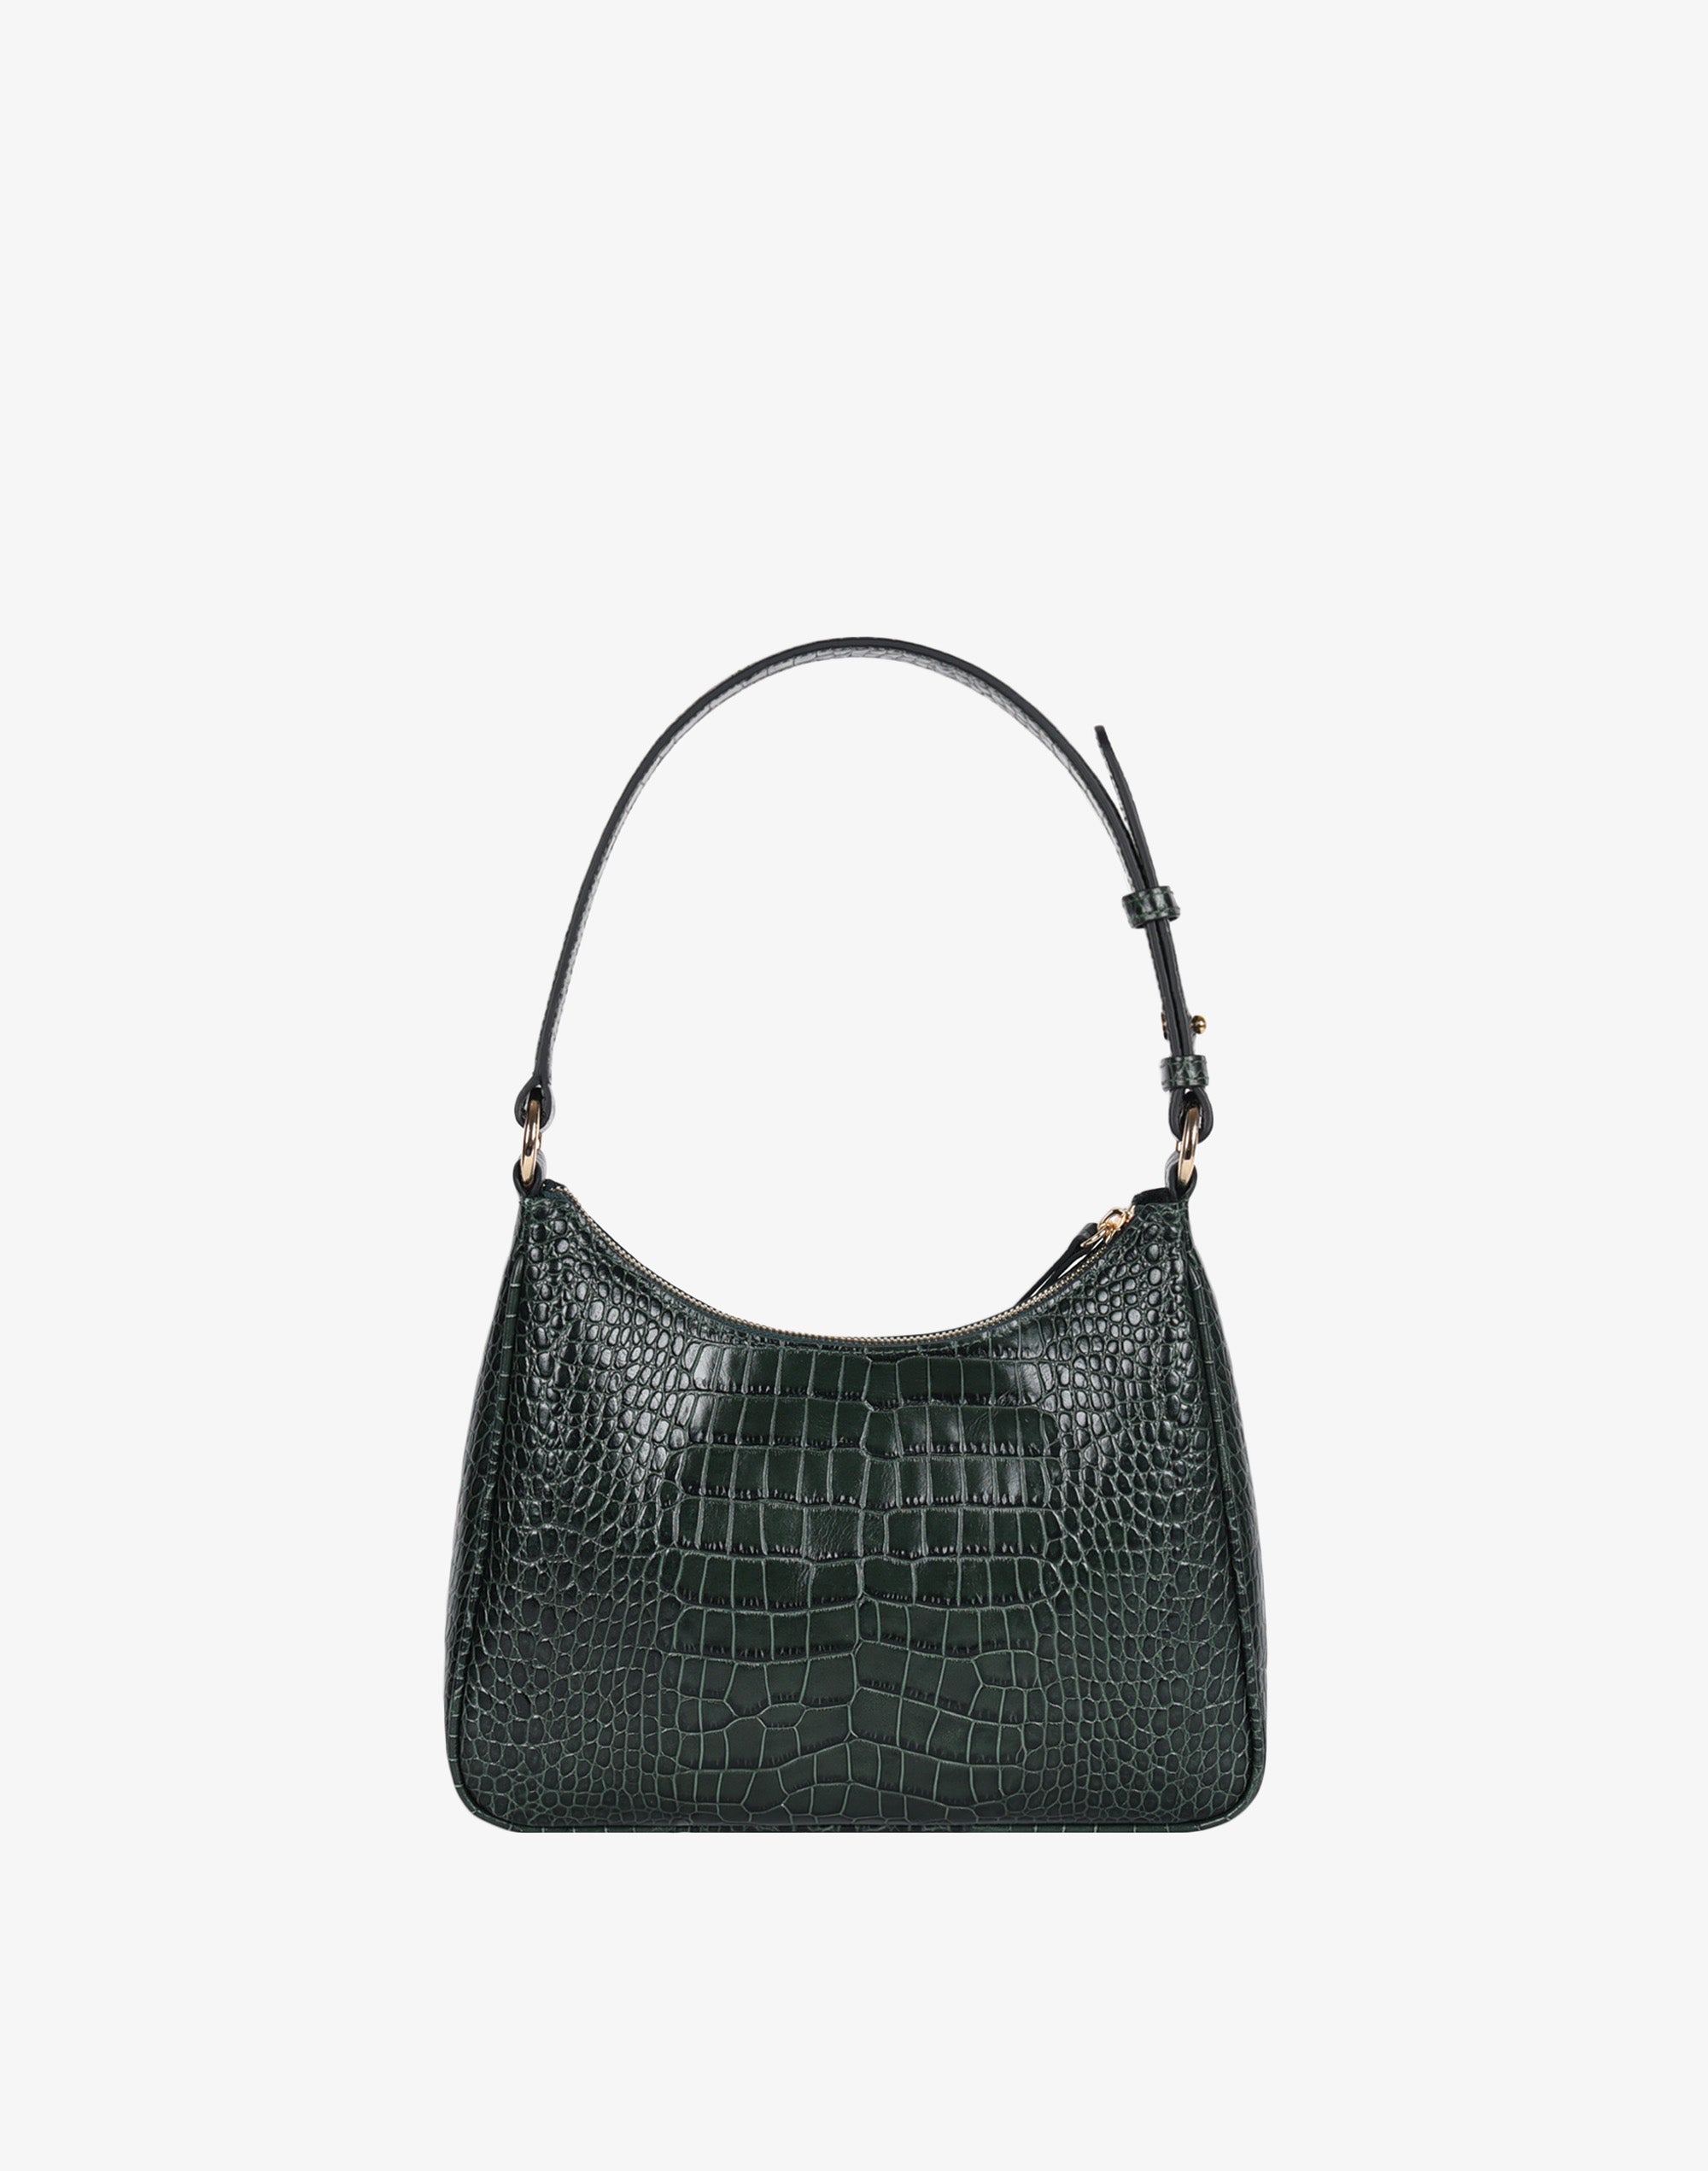 Women Handbags Crocodile Purse for Women, with Flap Gold Hardware Chain  Purses Shoulder Bag - AliExpress